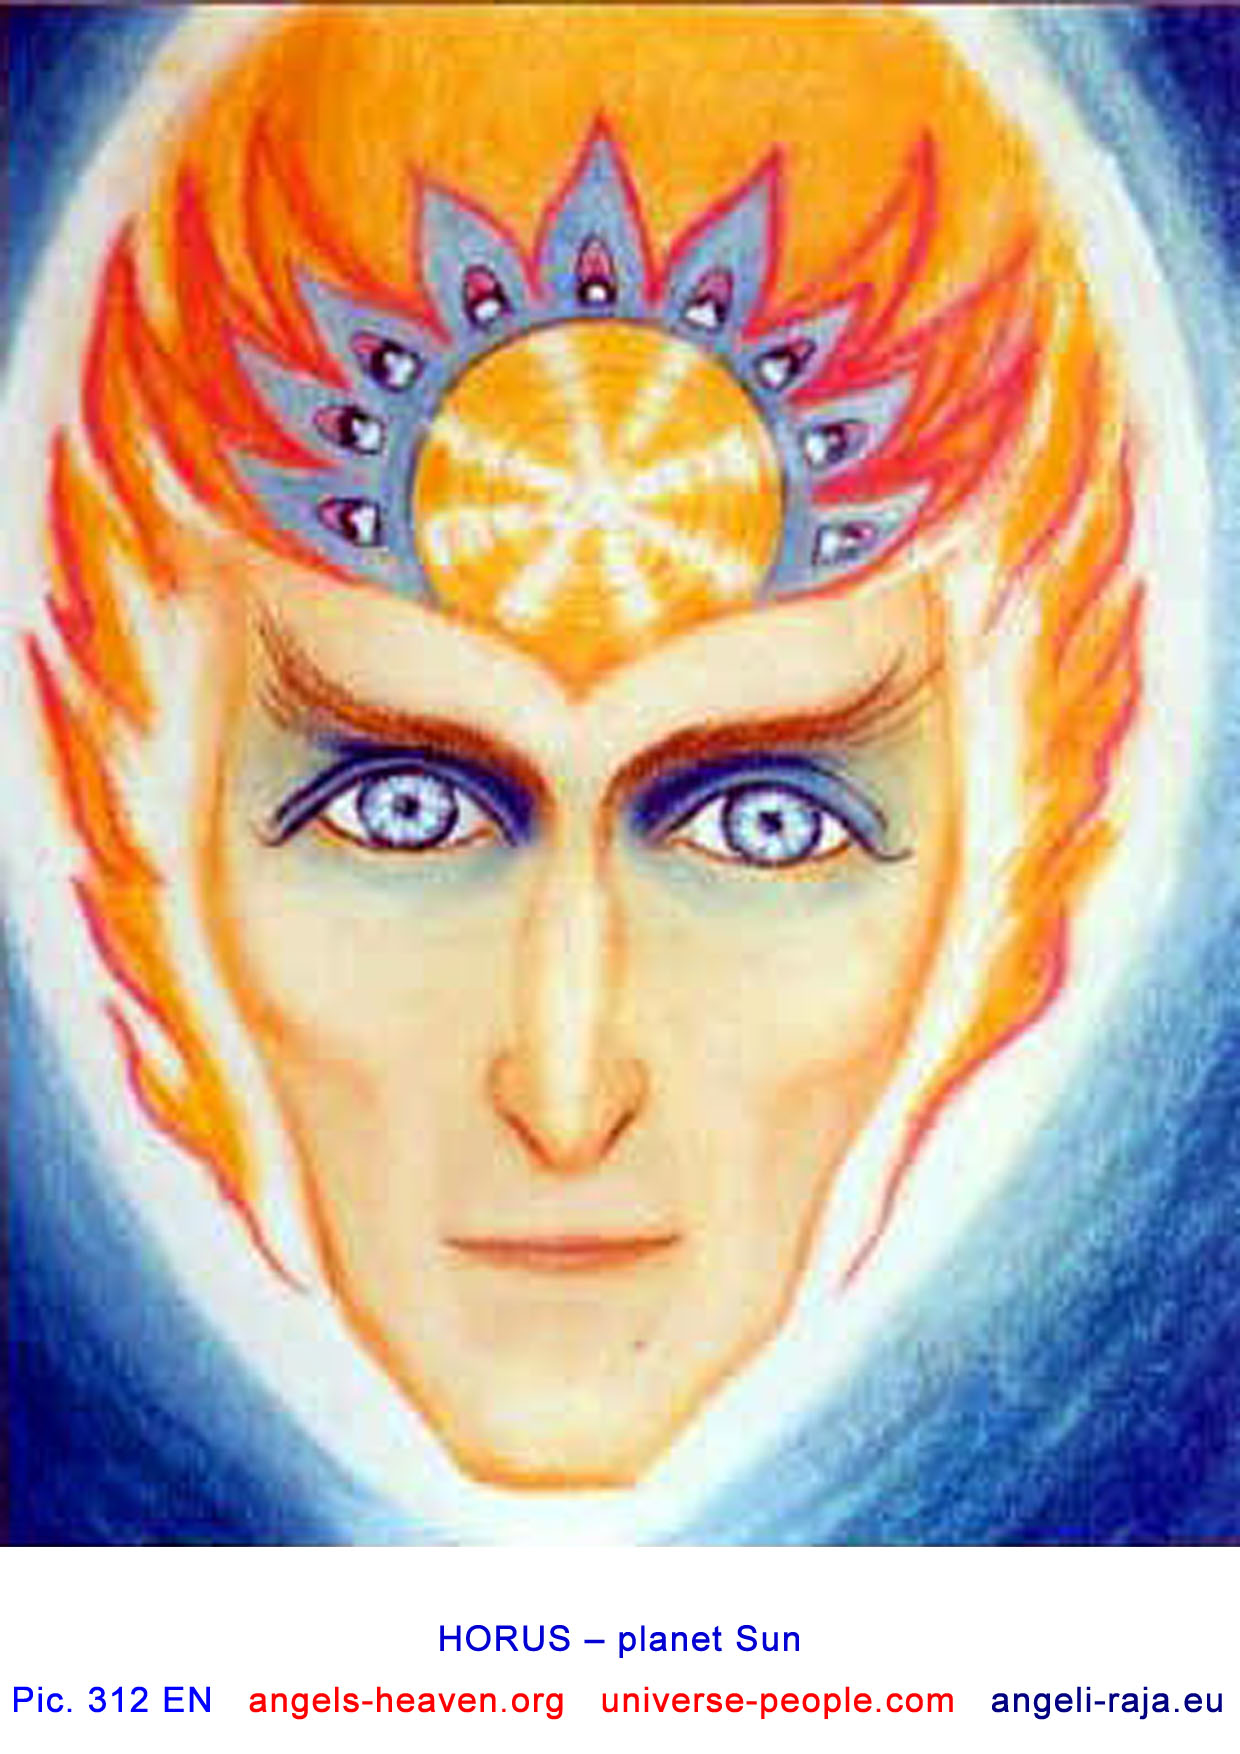 Cosmic master HORUS - planet Sun